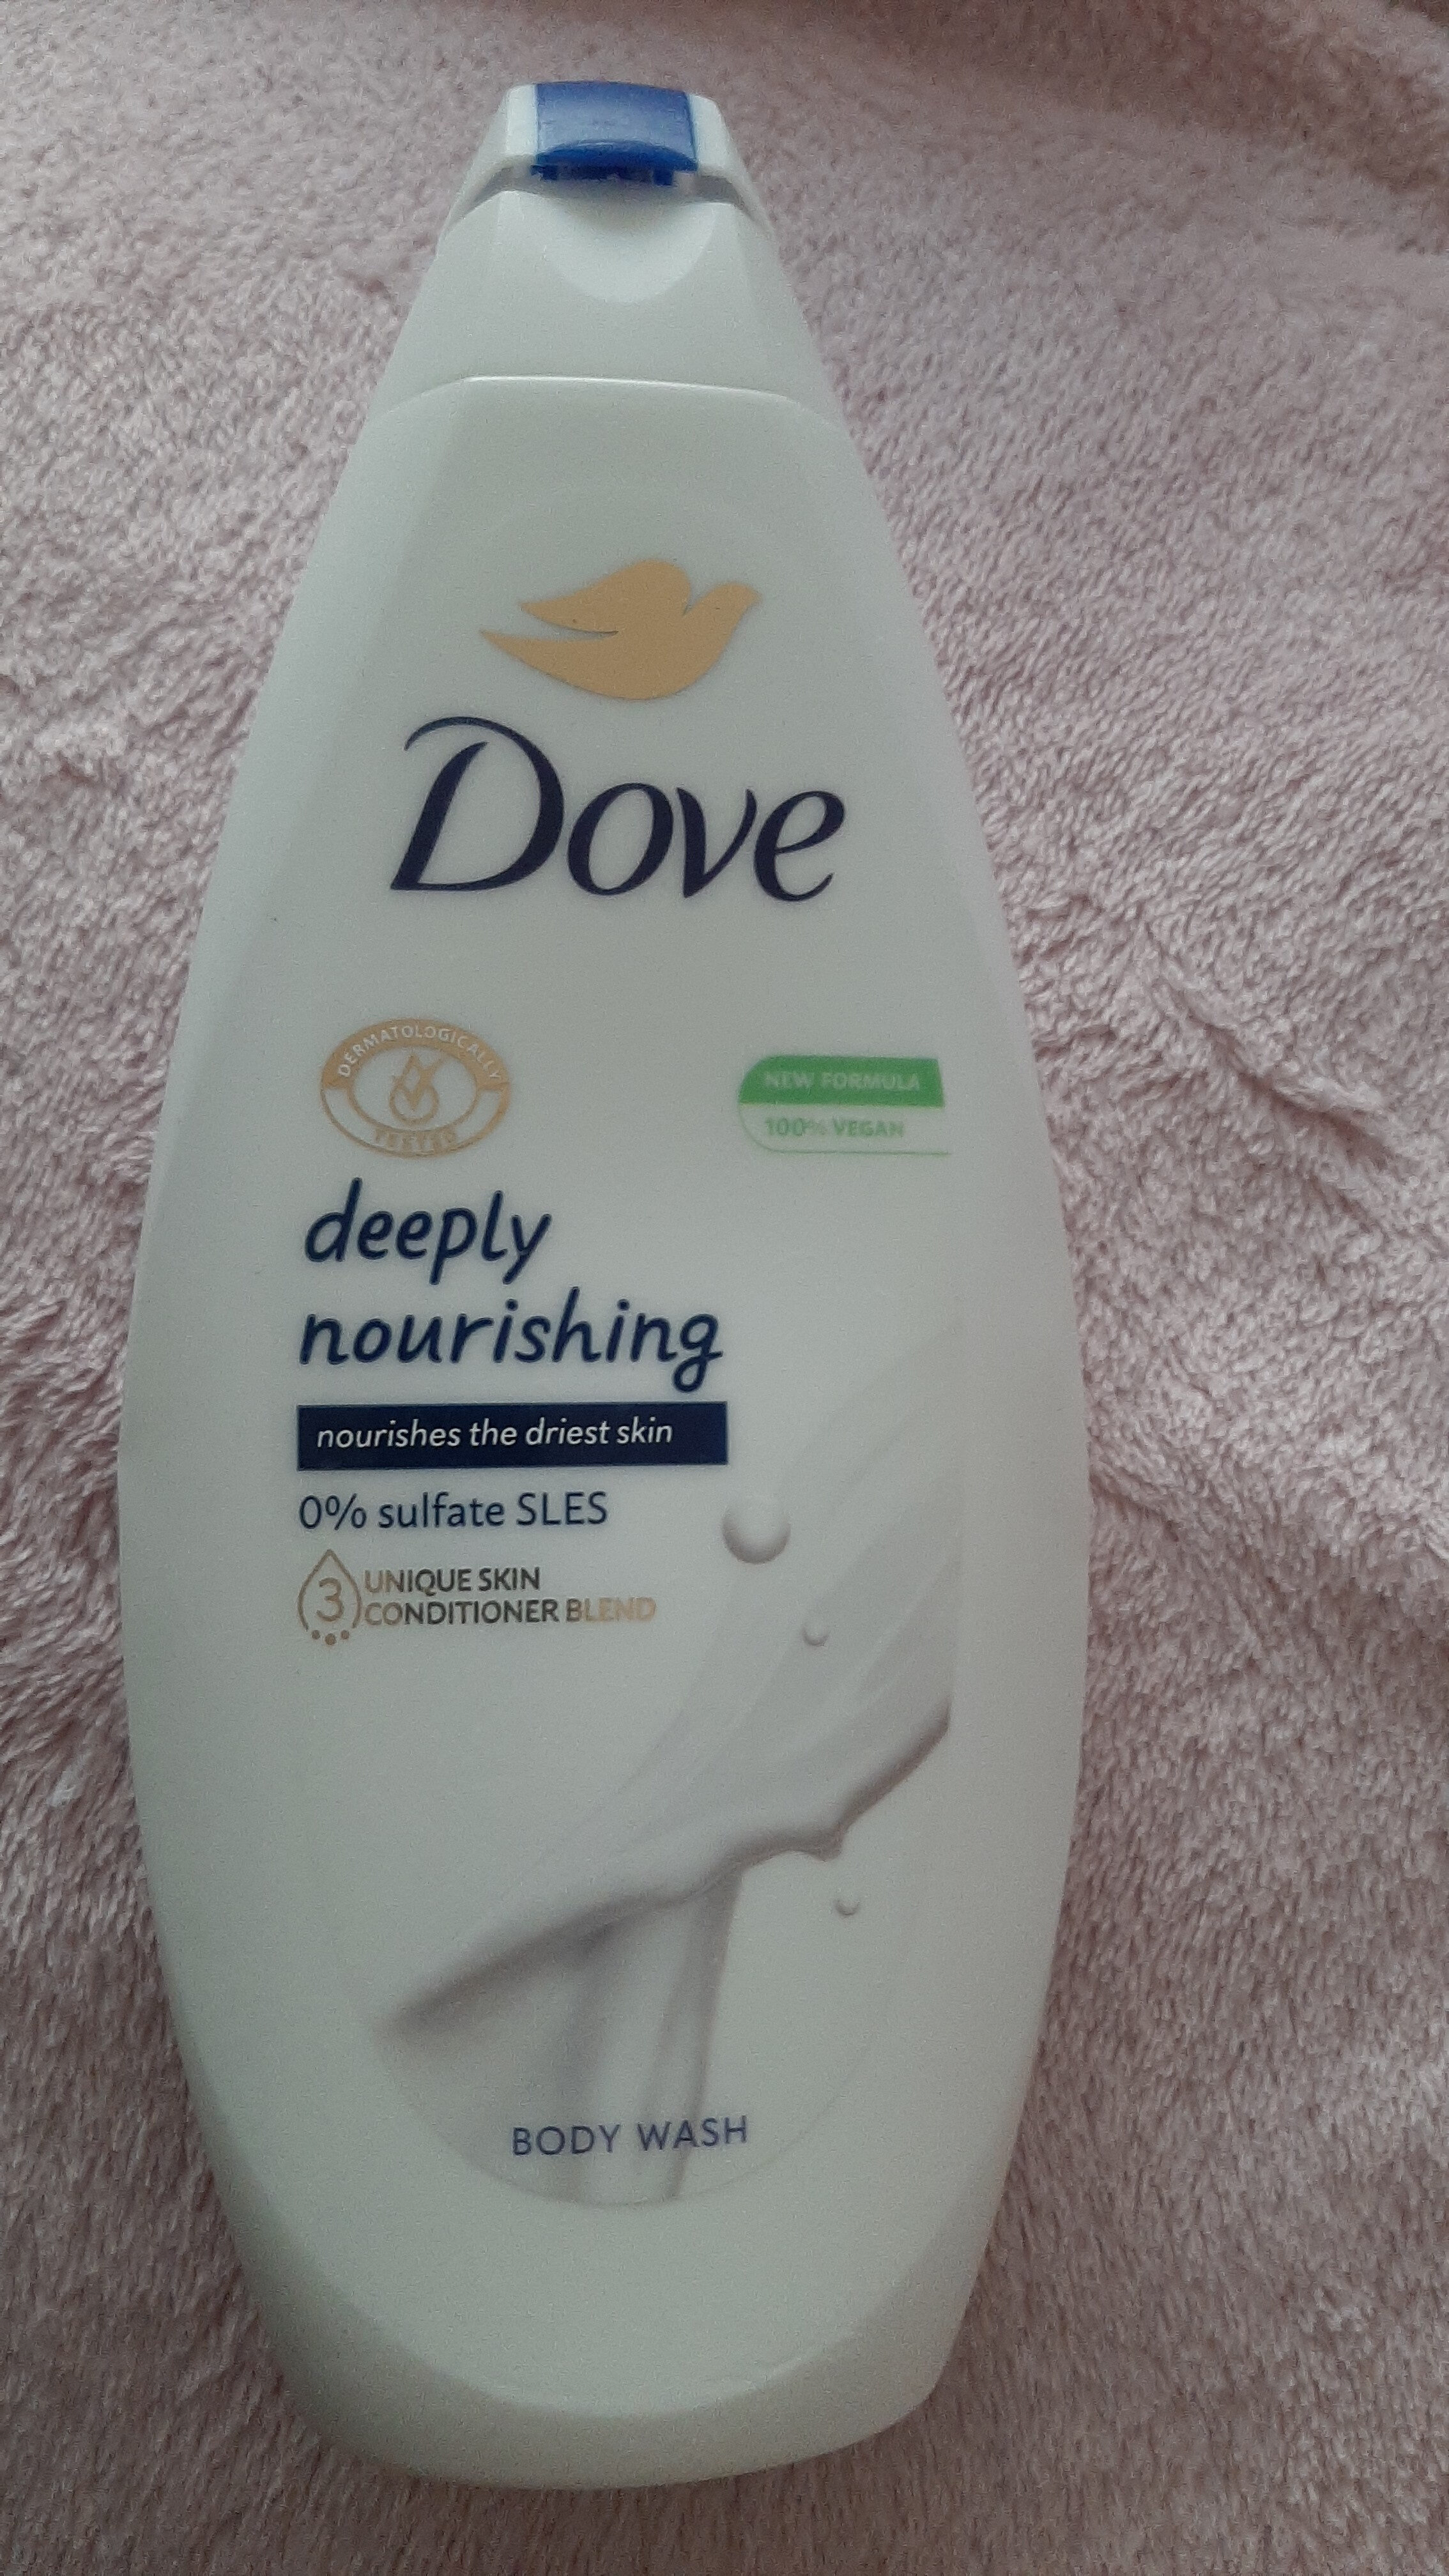 Dove deeply nourishing body wash - Product - en